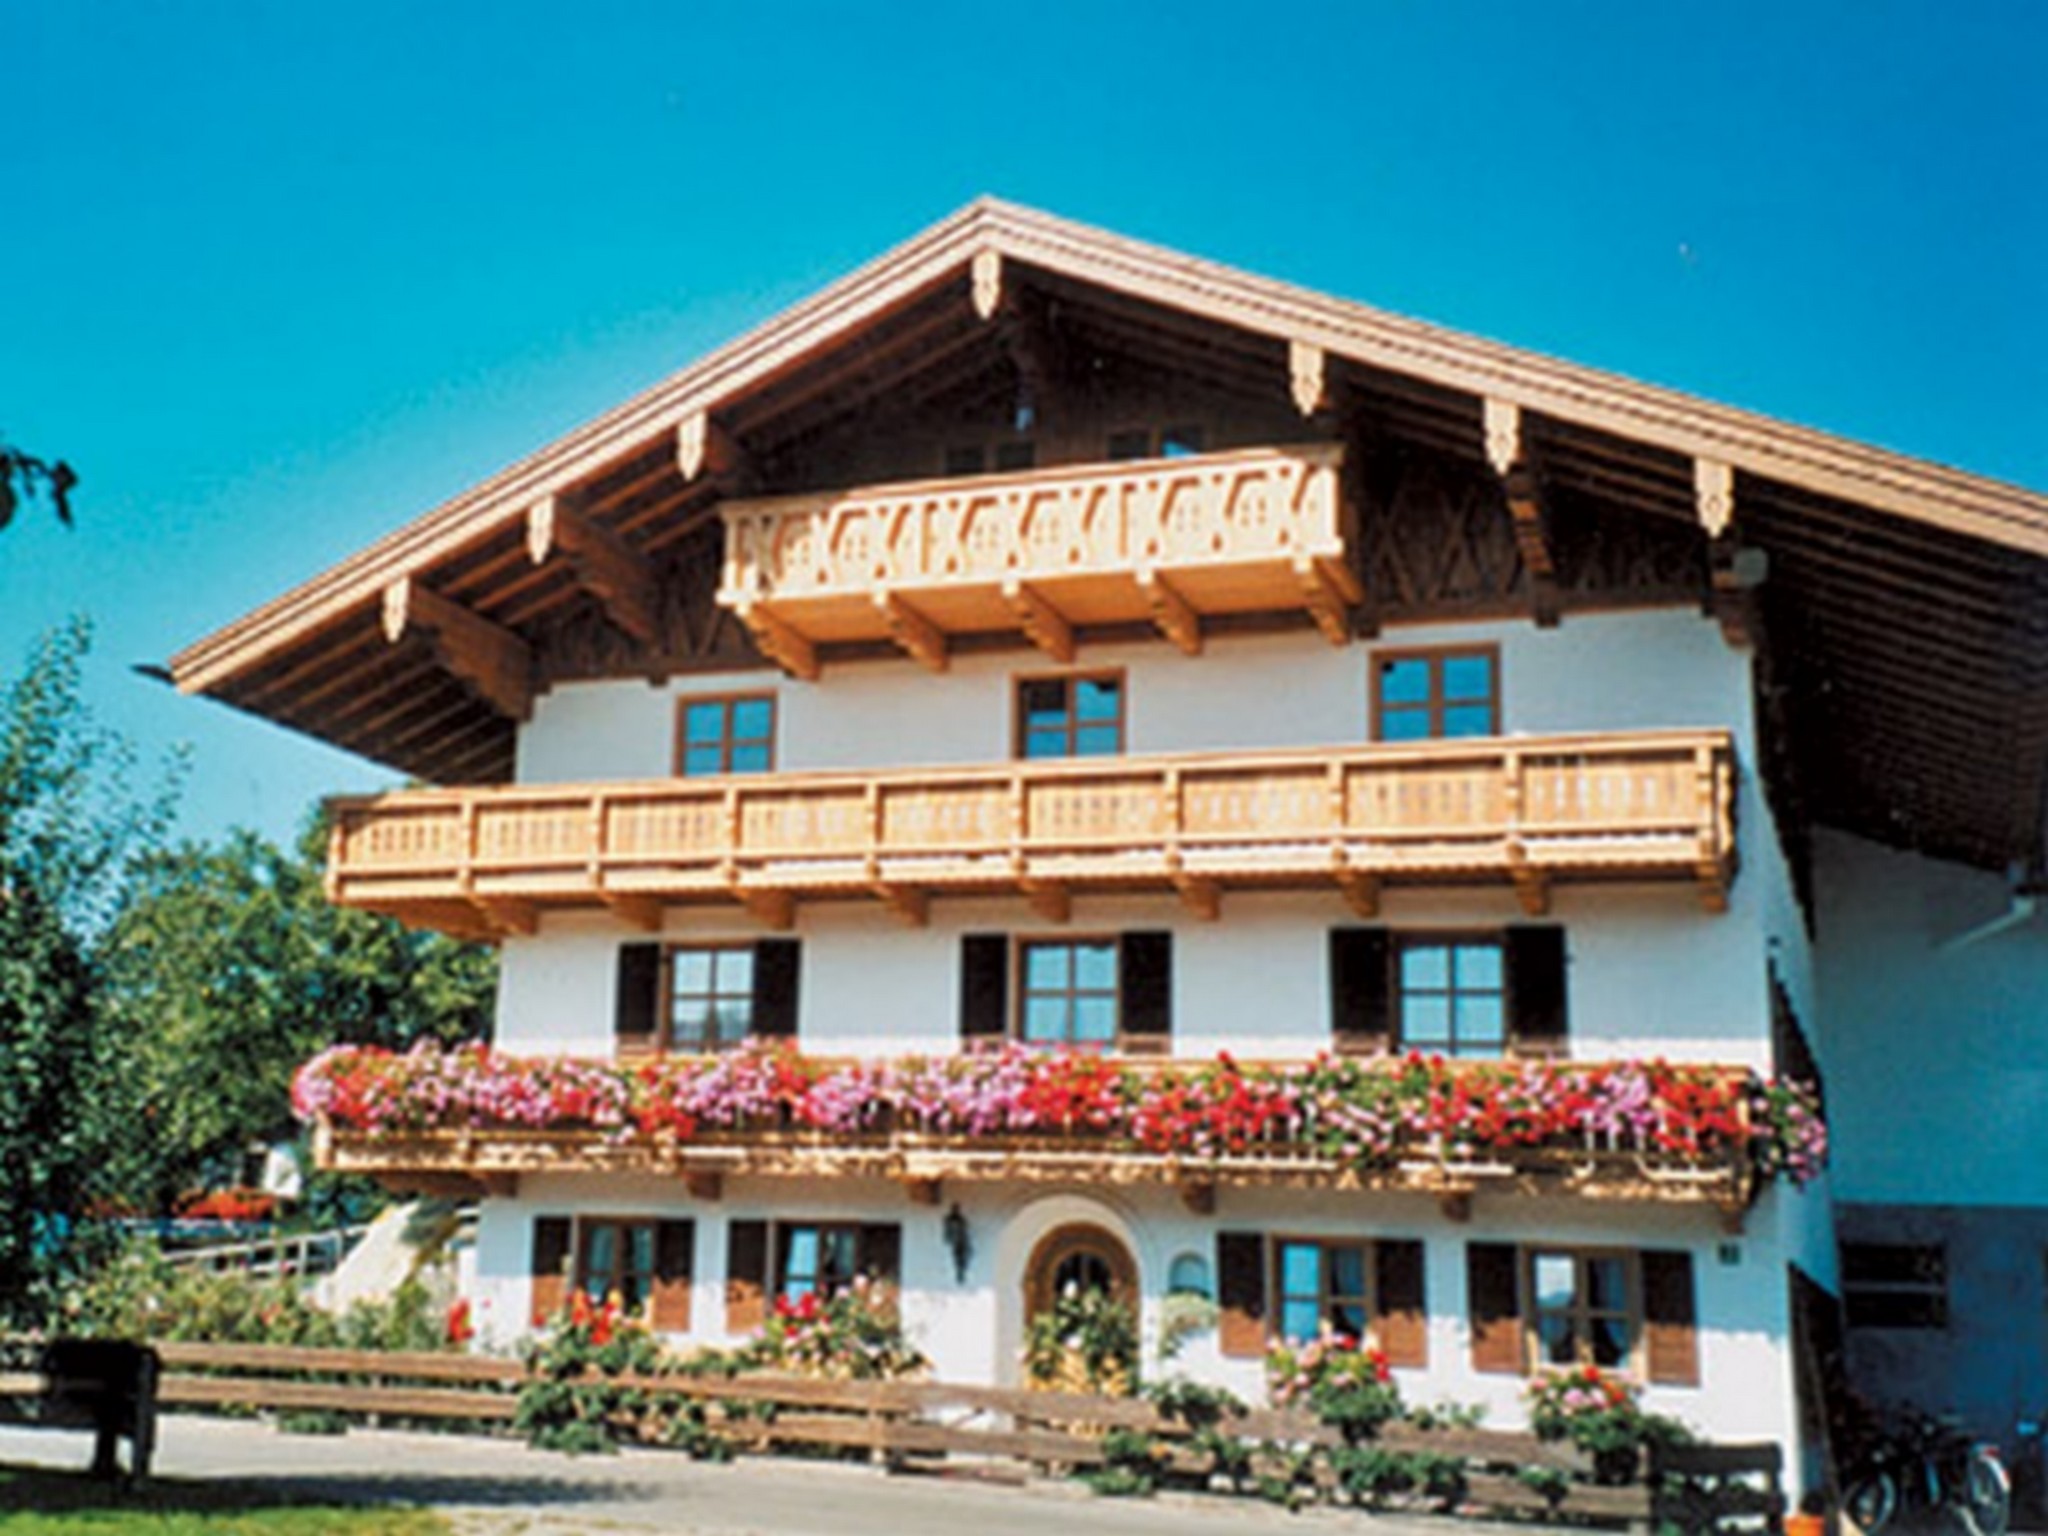 König Andrea Schwaigerhof Rottau (DE Rottau). Ferienwohnung in Europa